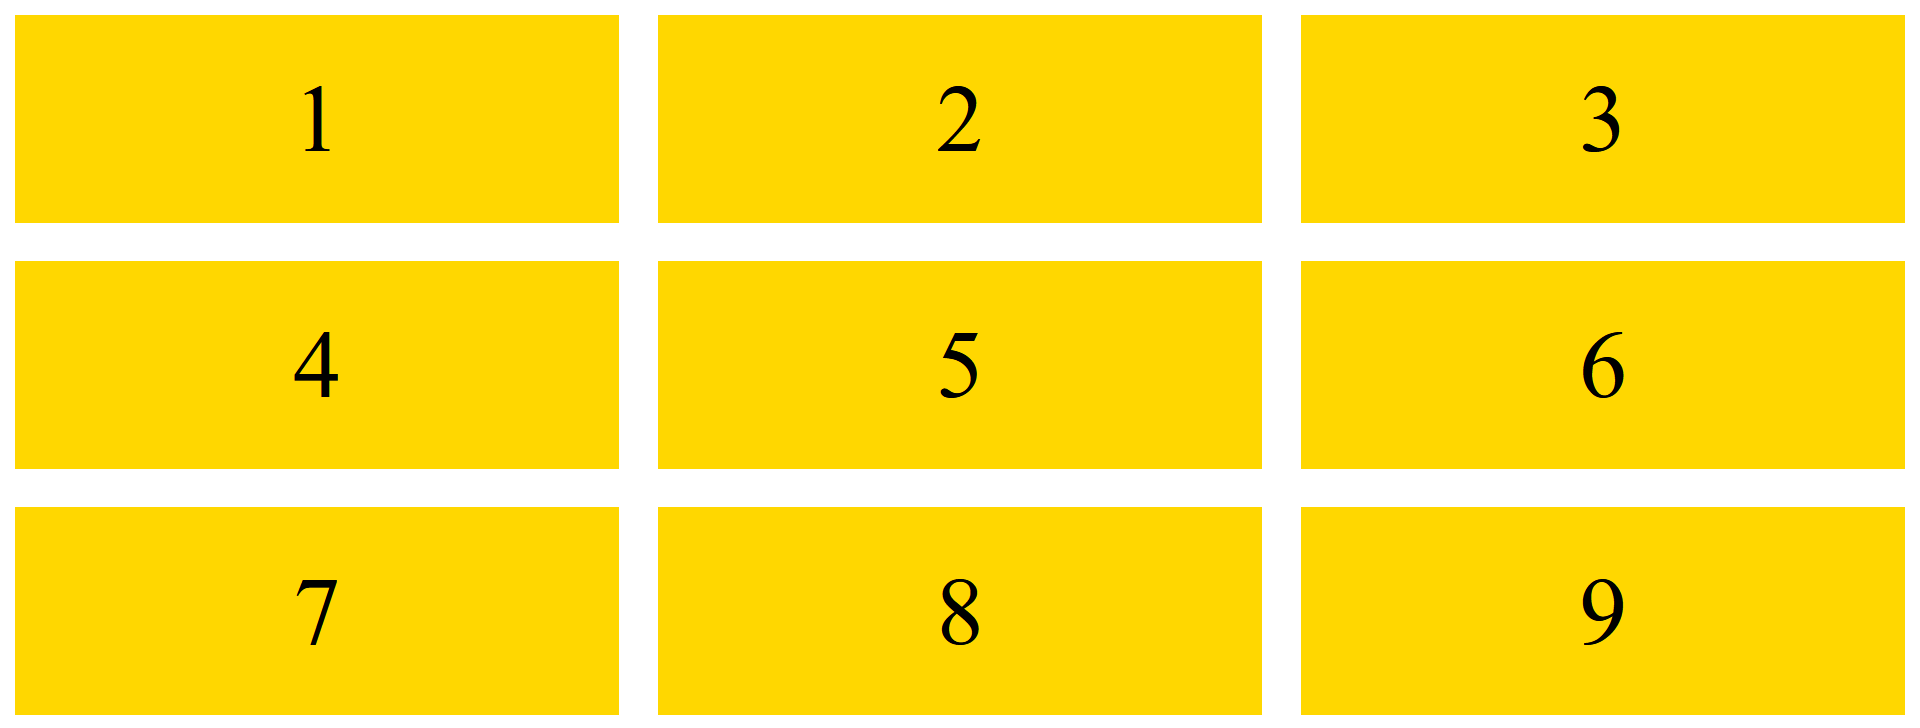 Базовая сетка 3x3 (3 строки и 3 столбца)